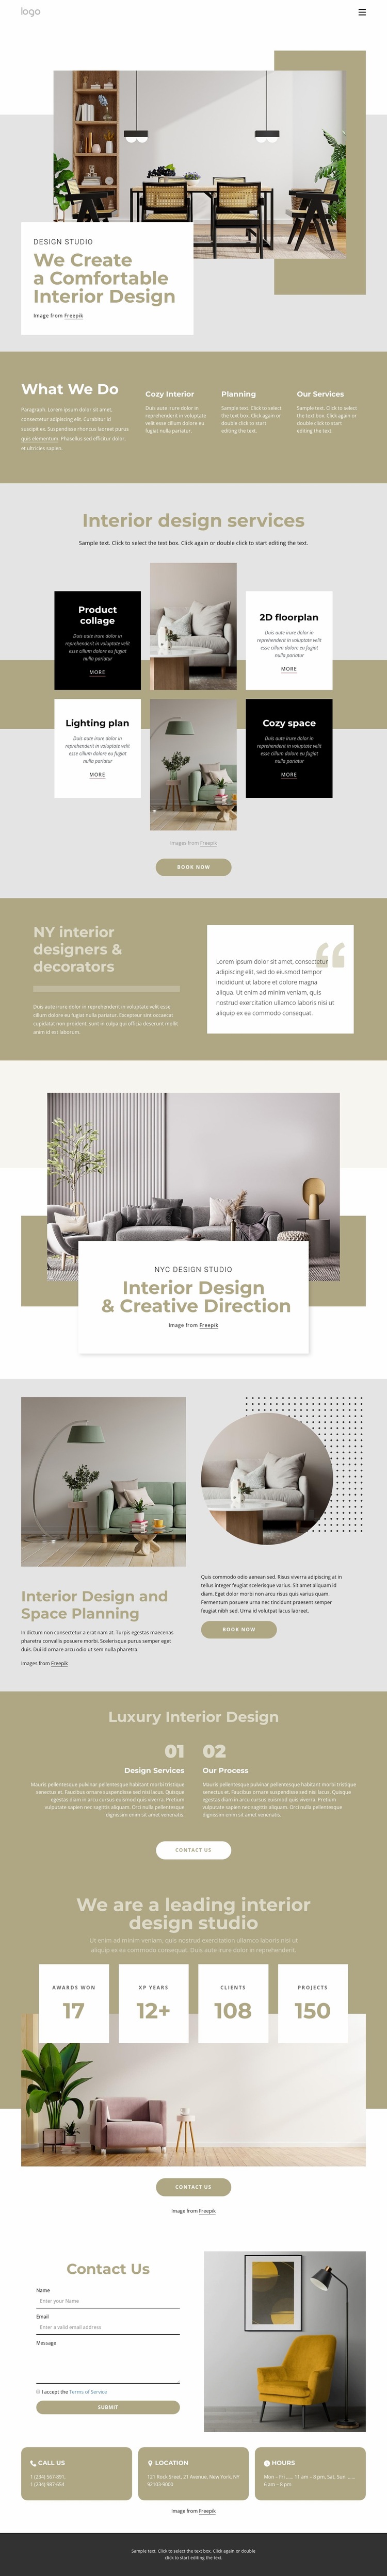 We create a comfortable interiors Website Builder Templates